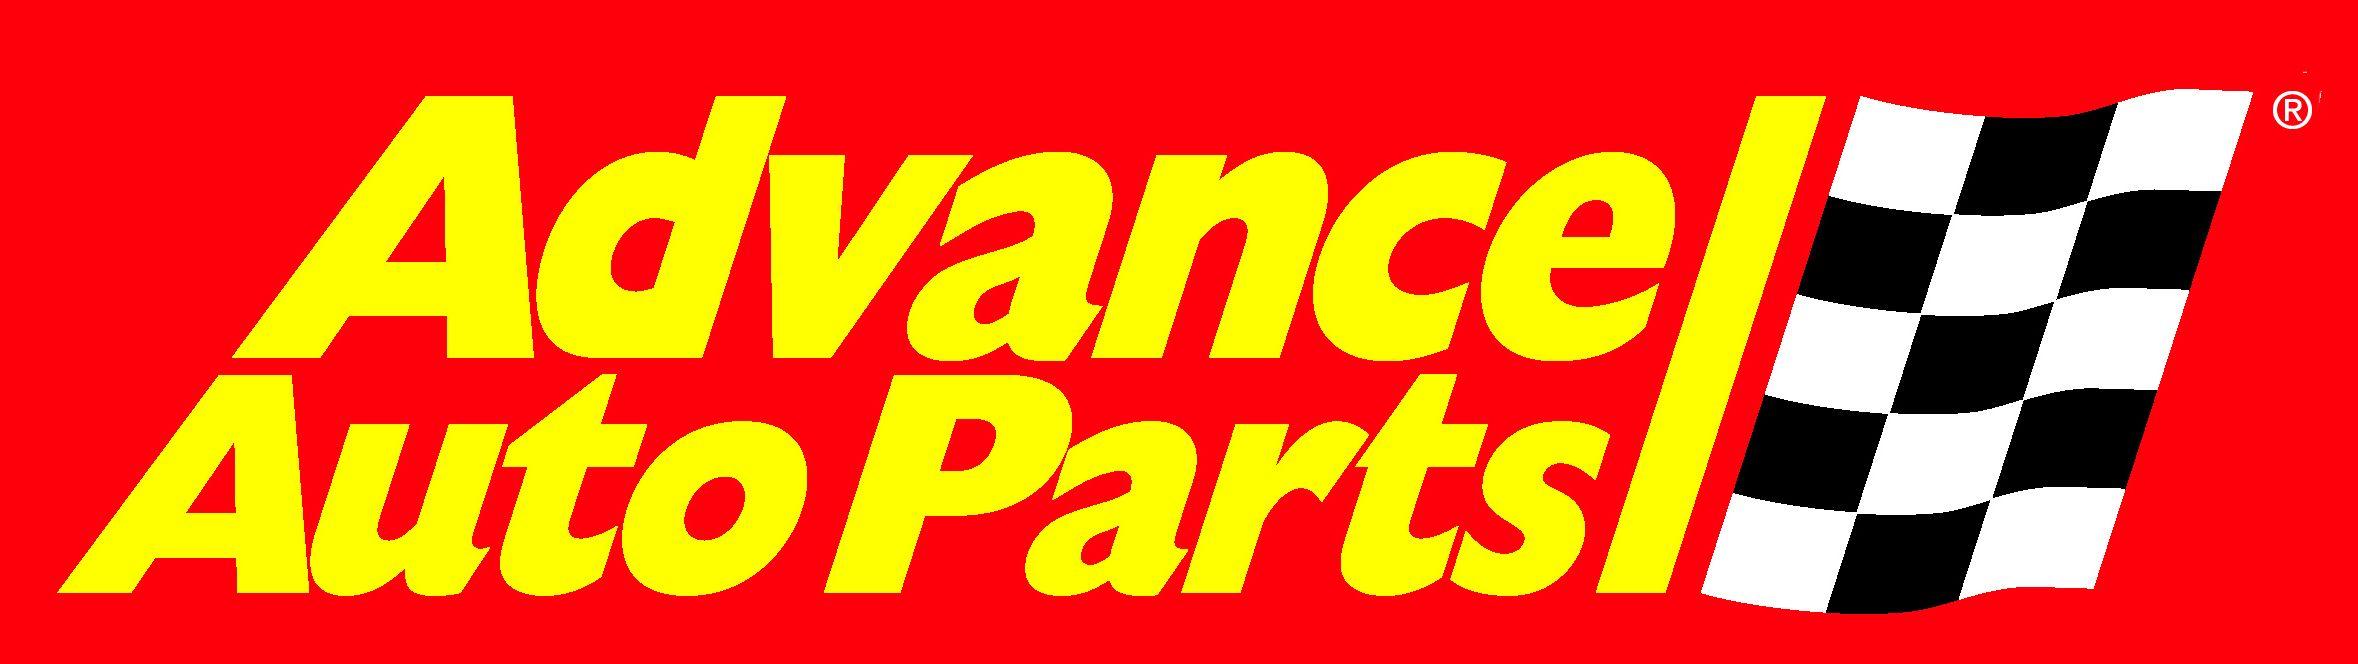 Advance Auto Parts Logo - Motor Oil Money Maker from Advance Auto Parts. Brand Logos. Car